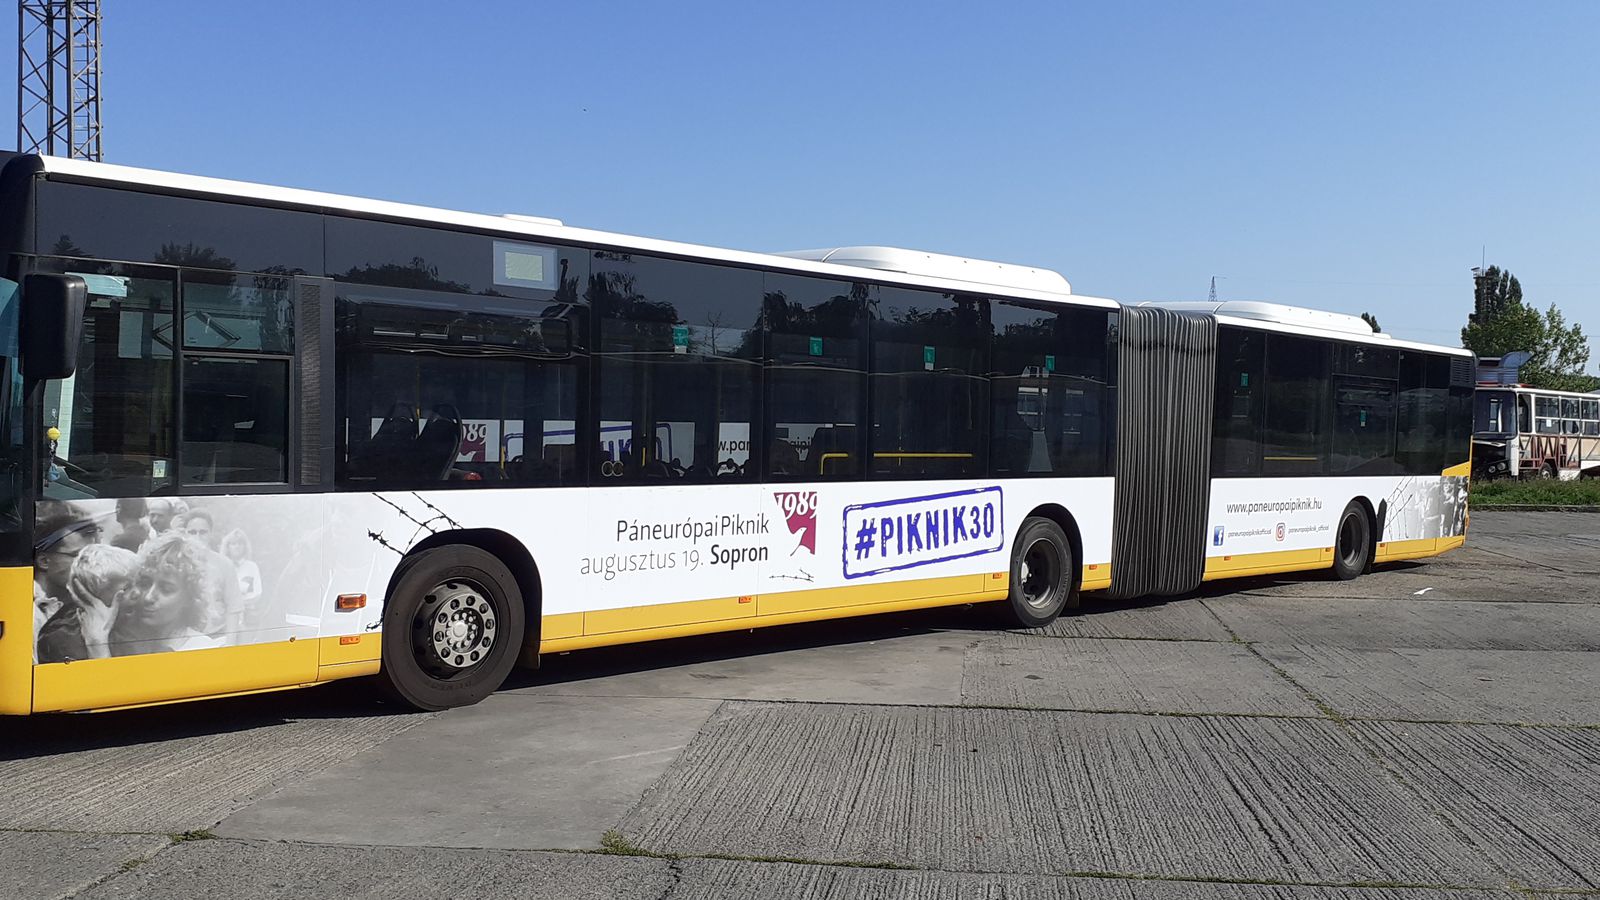 Even buses got dressed in #PIKNIK30 attire